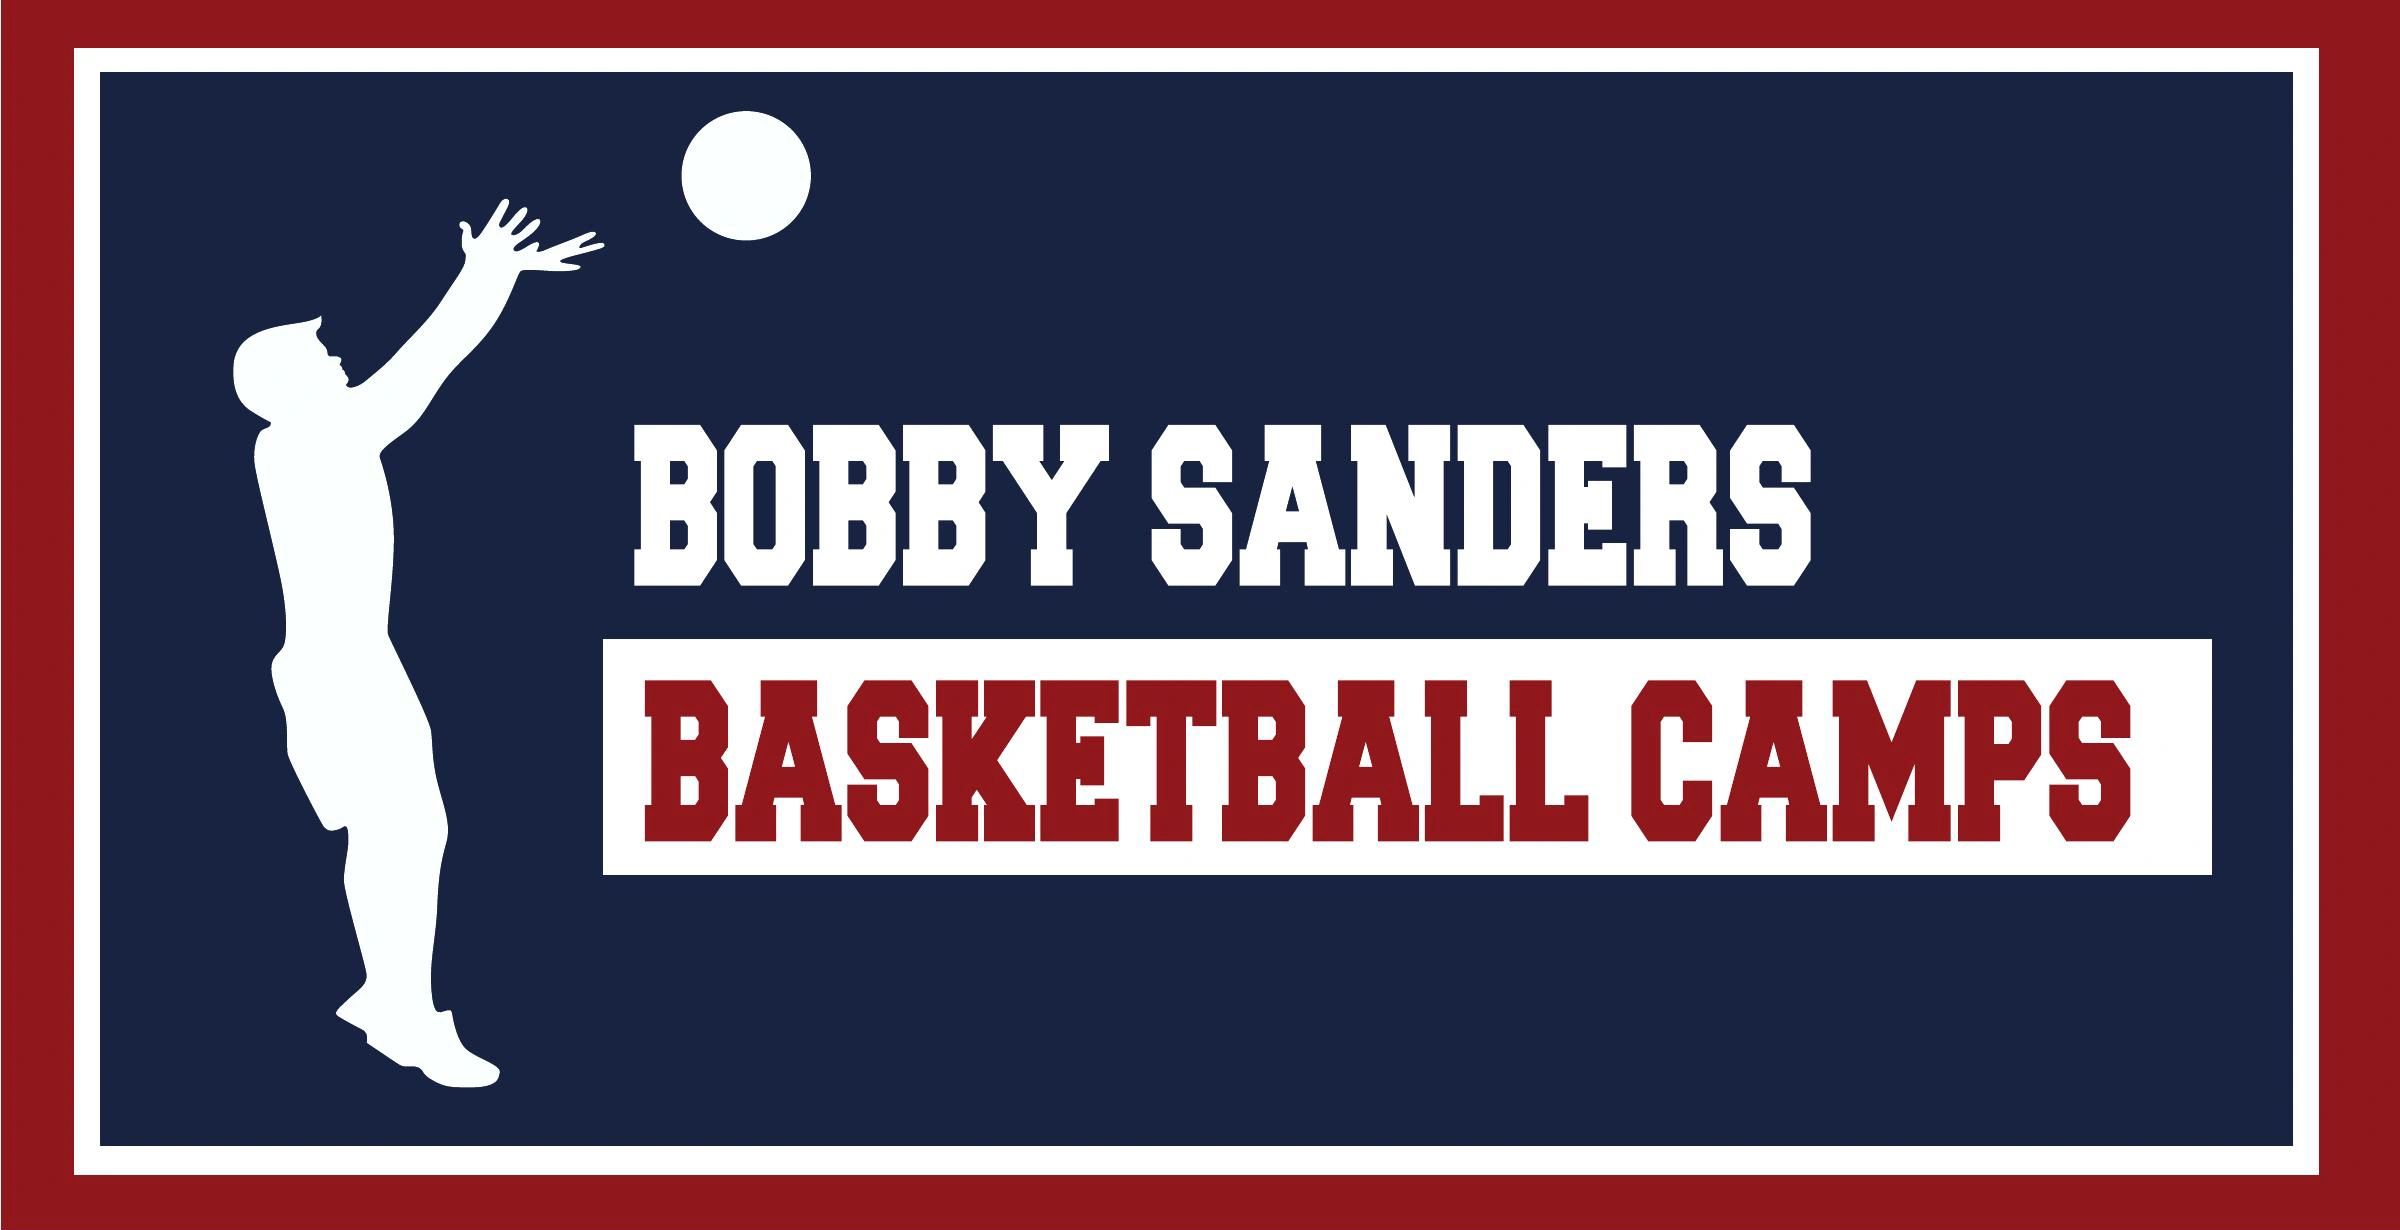 Bobby Sanders Basketball Camps